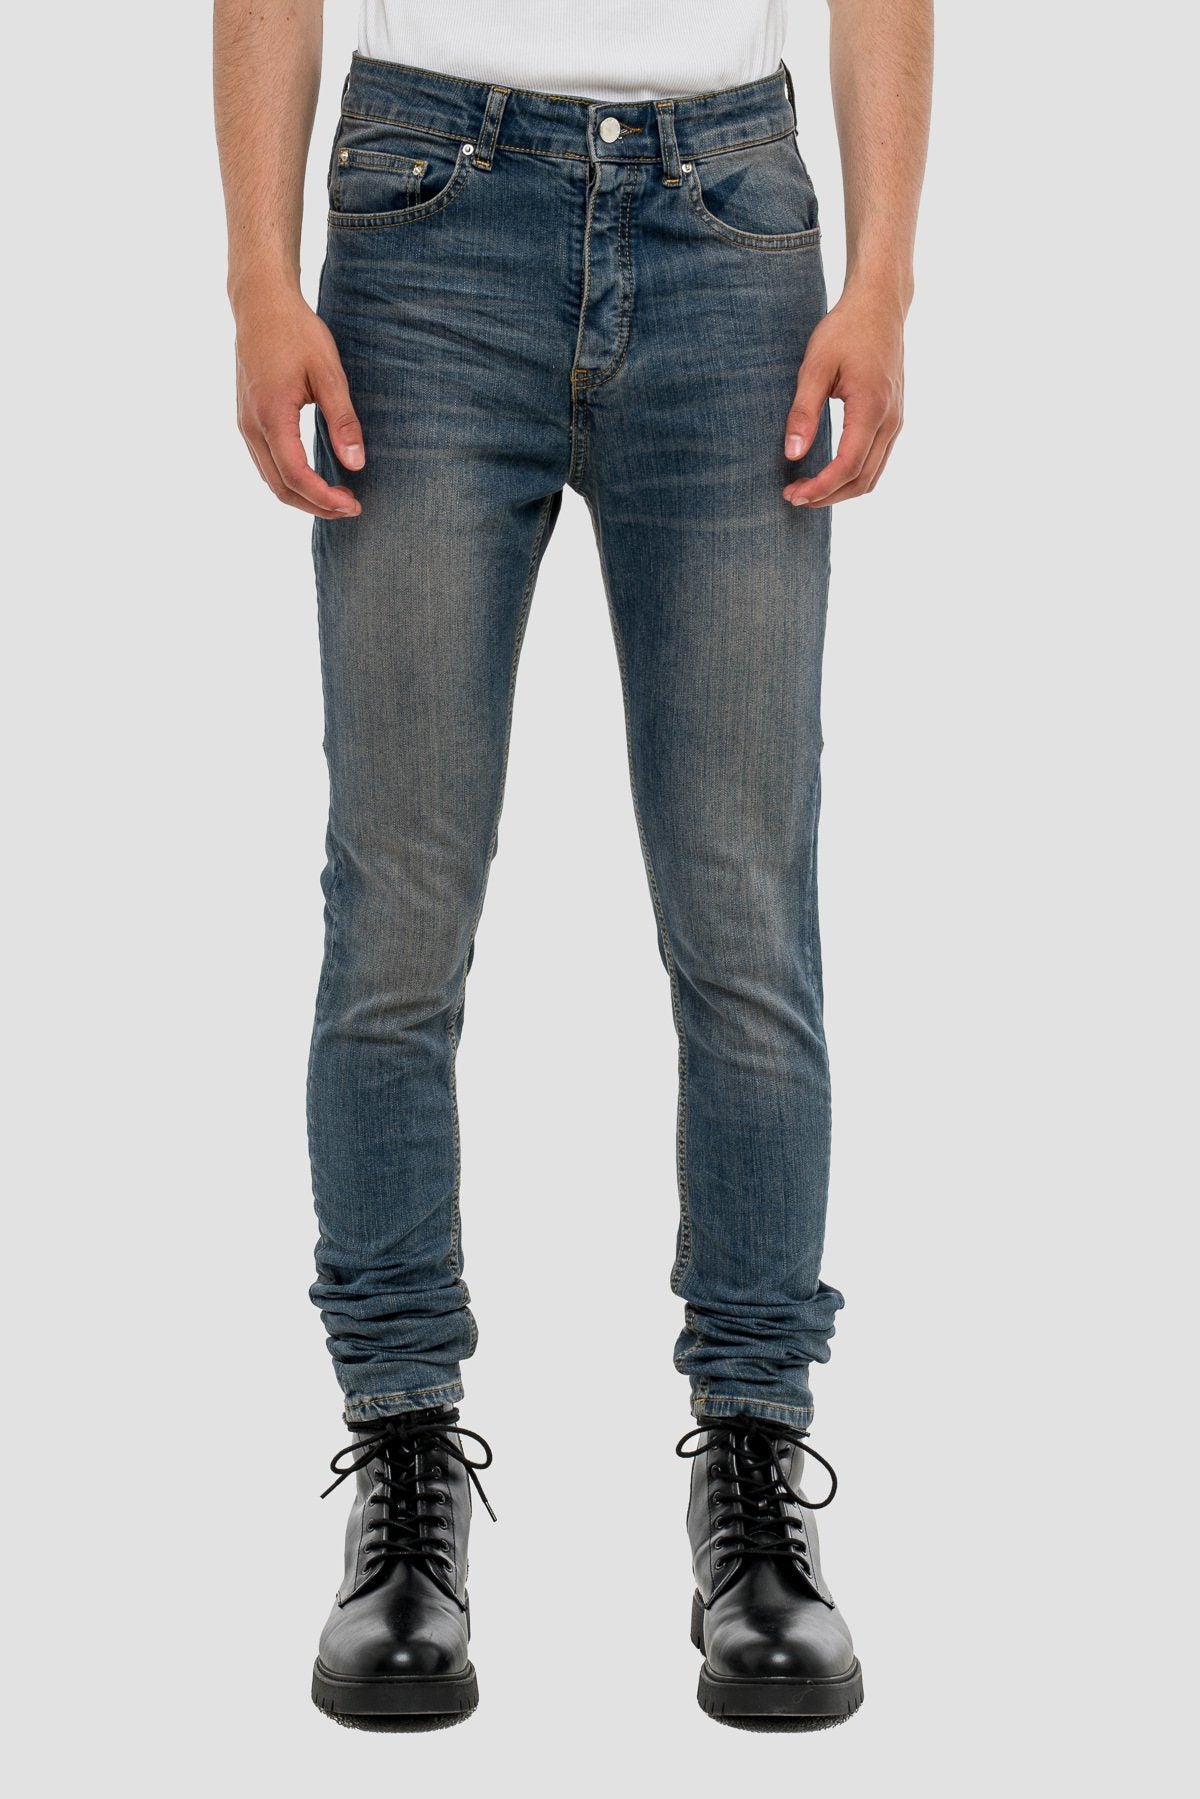 Essential Skinny Jeans in Dark Indigo Denim